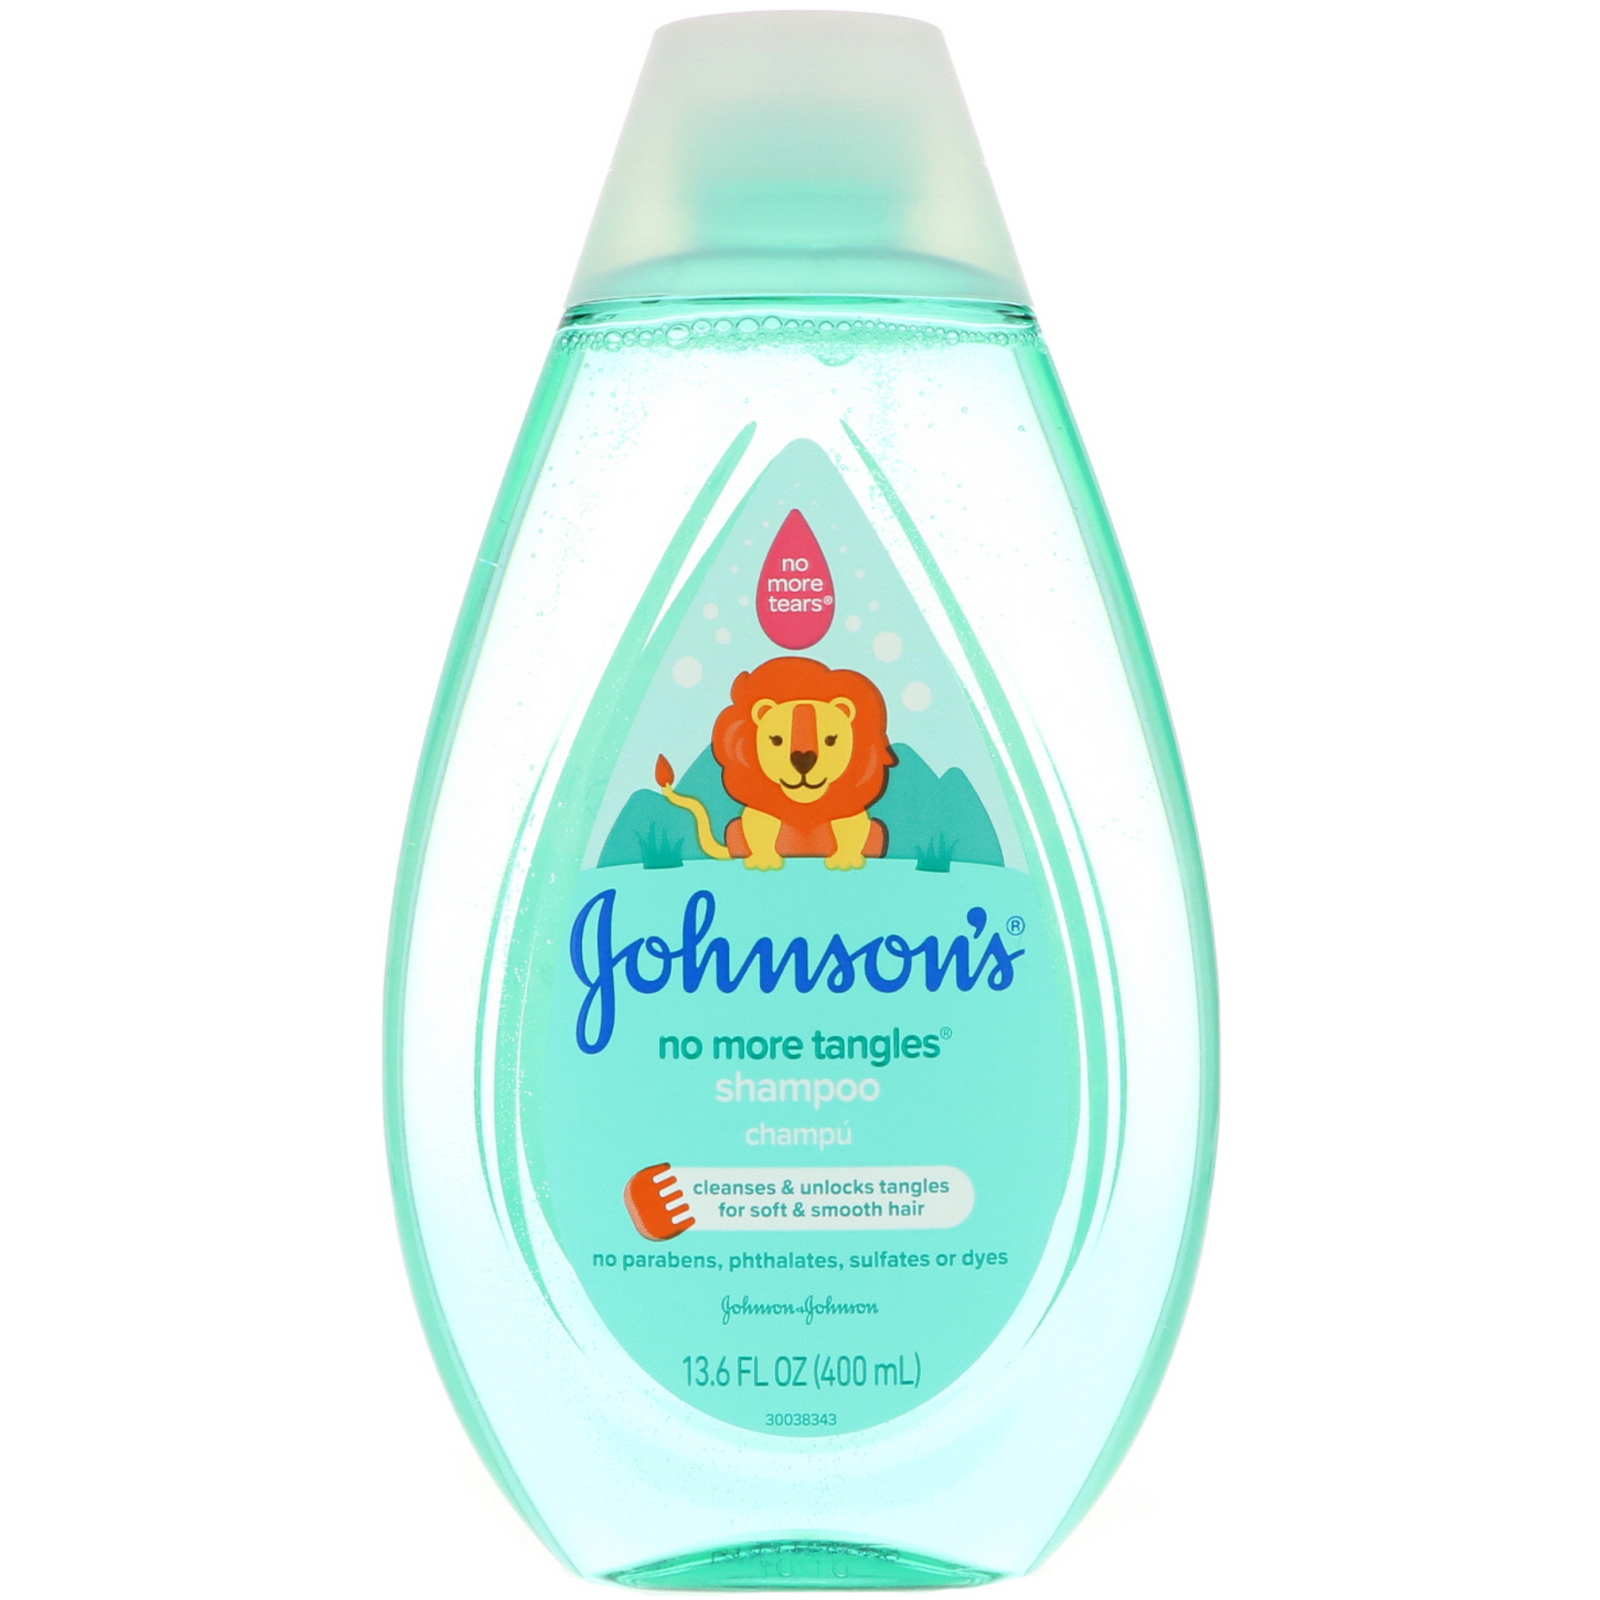 johnson's no more tears shampoo